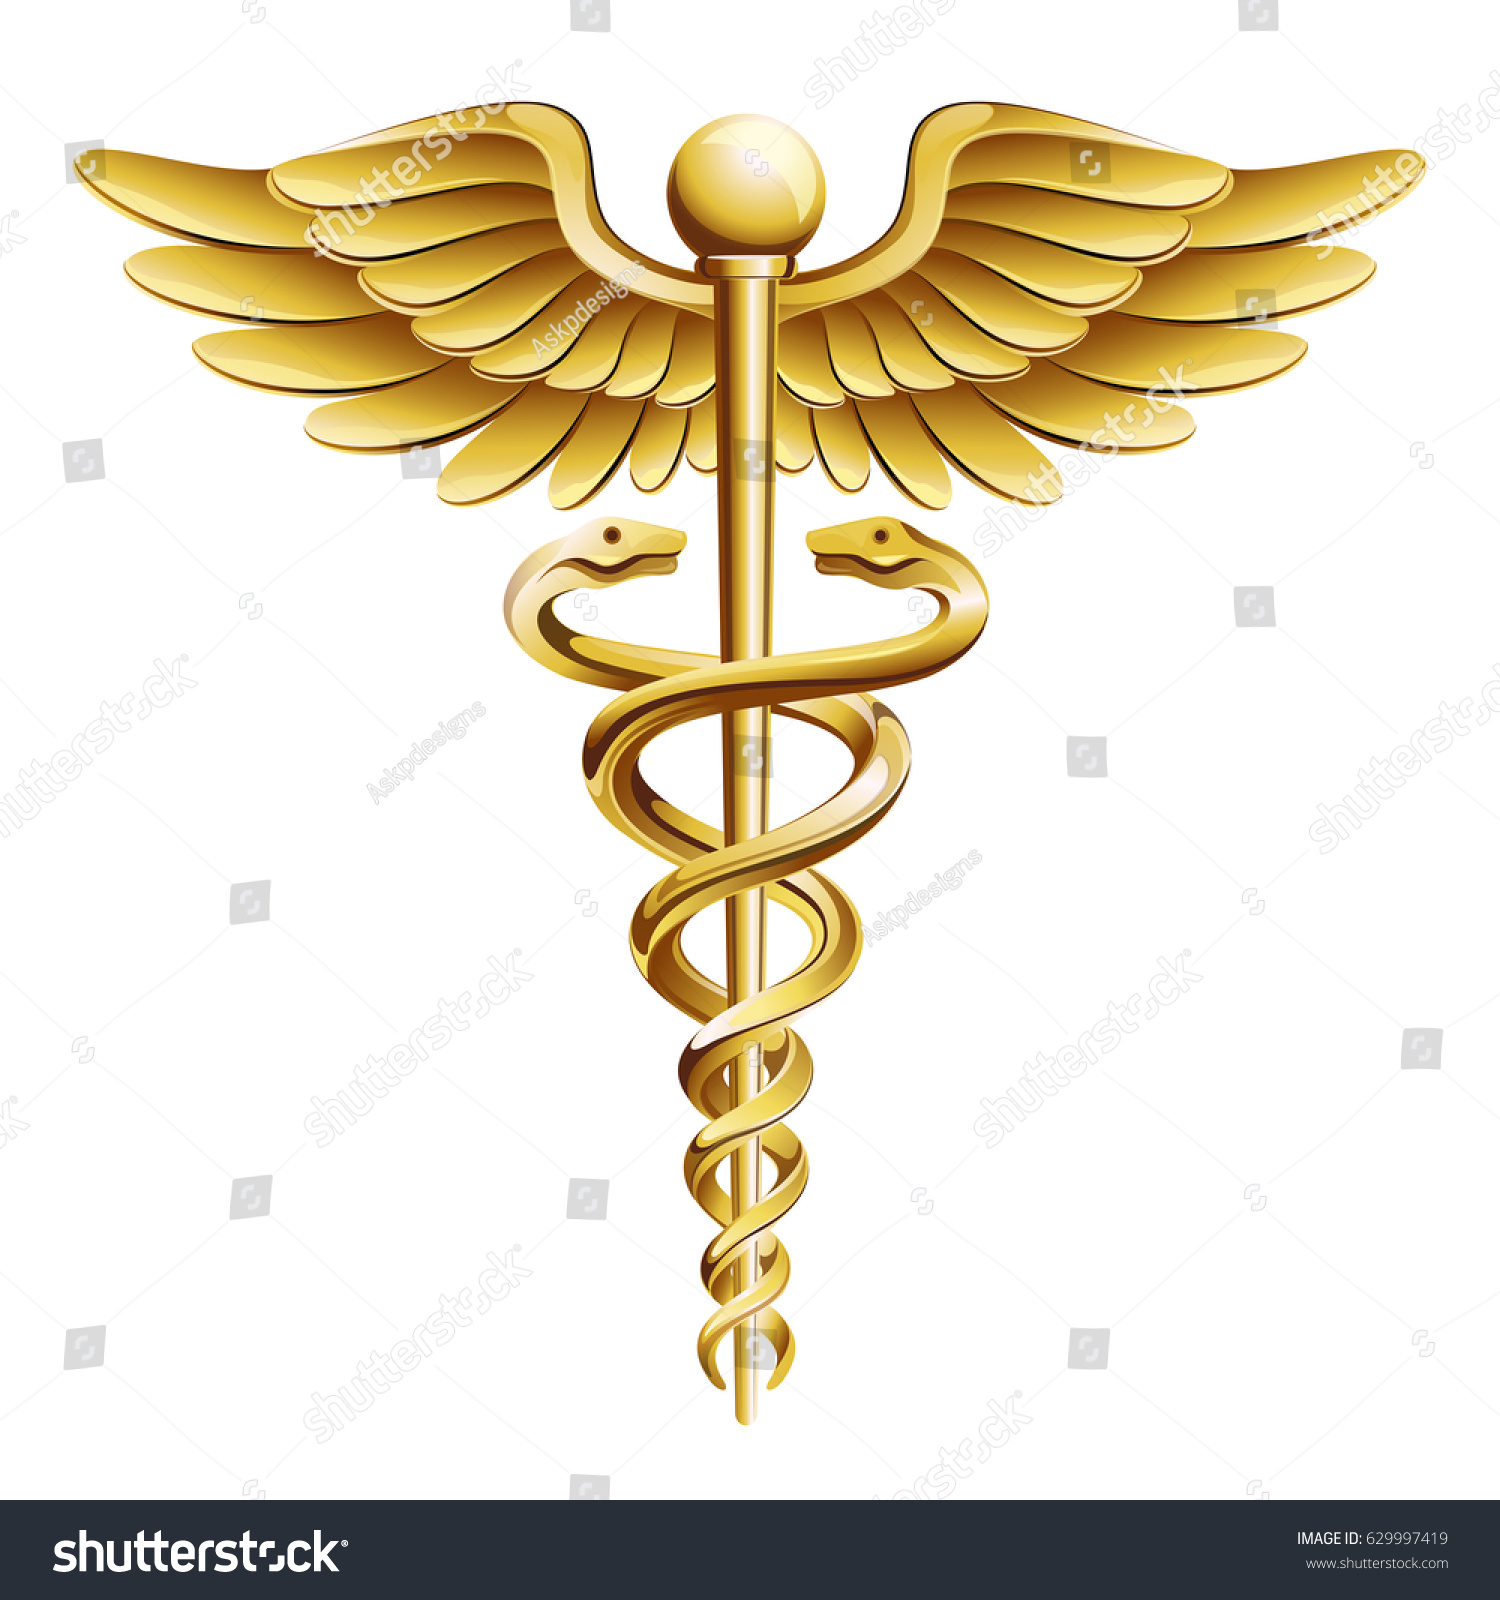 27,068 Gold medical symbol Images, Stock Photos & Vectors | Shutterstock